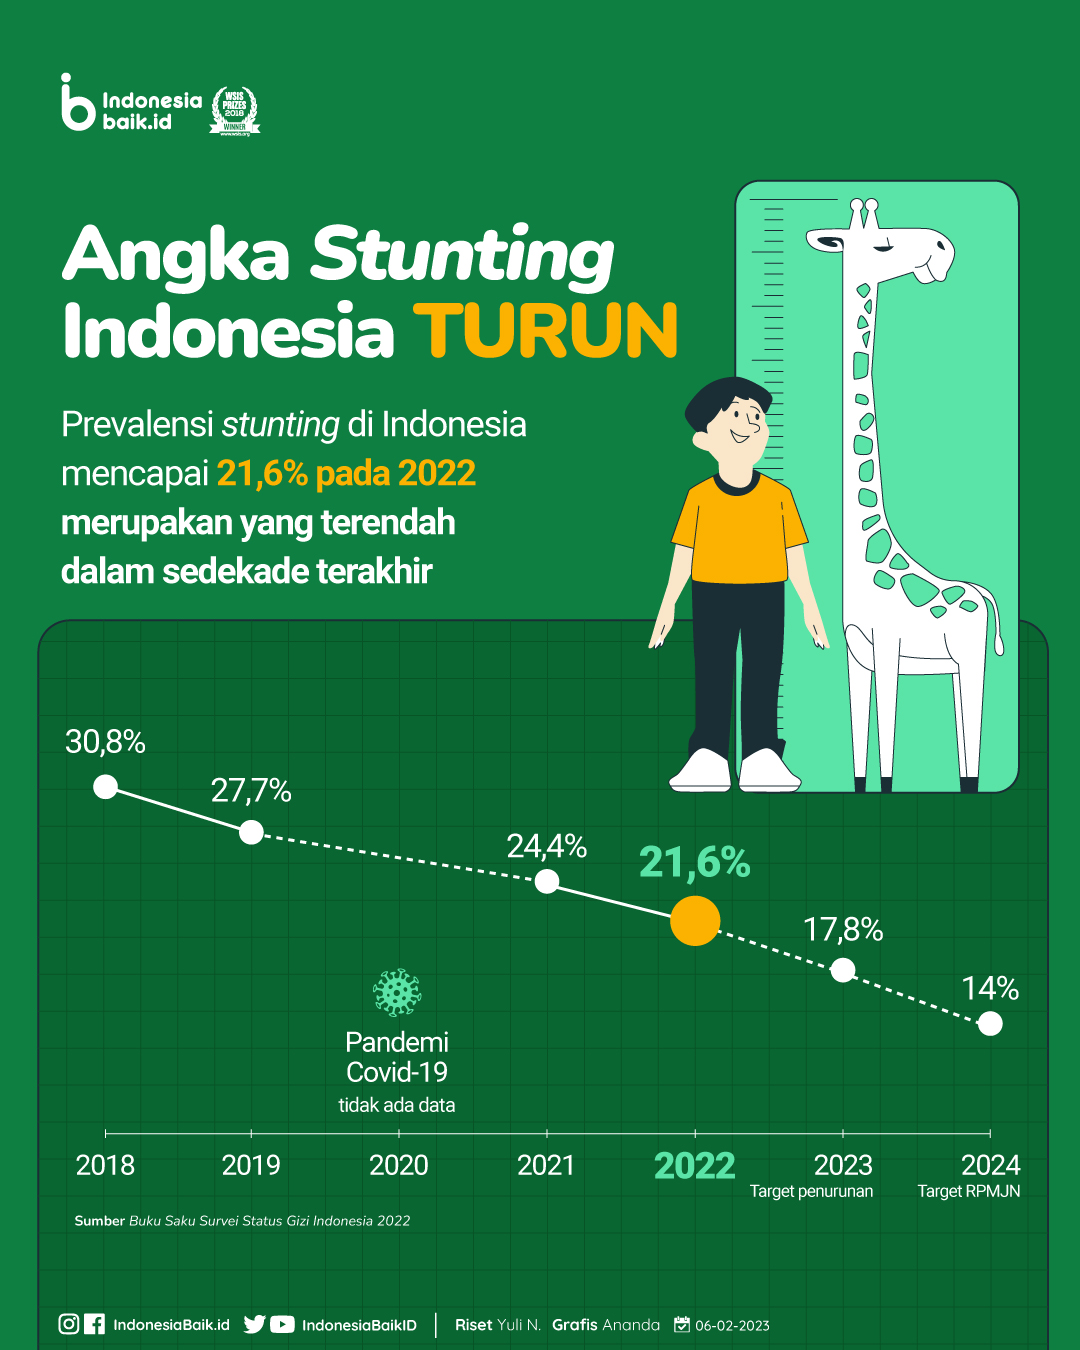 angka stunting di indonesia